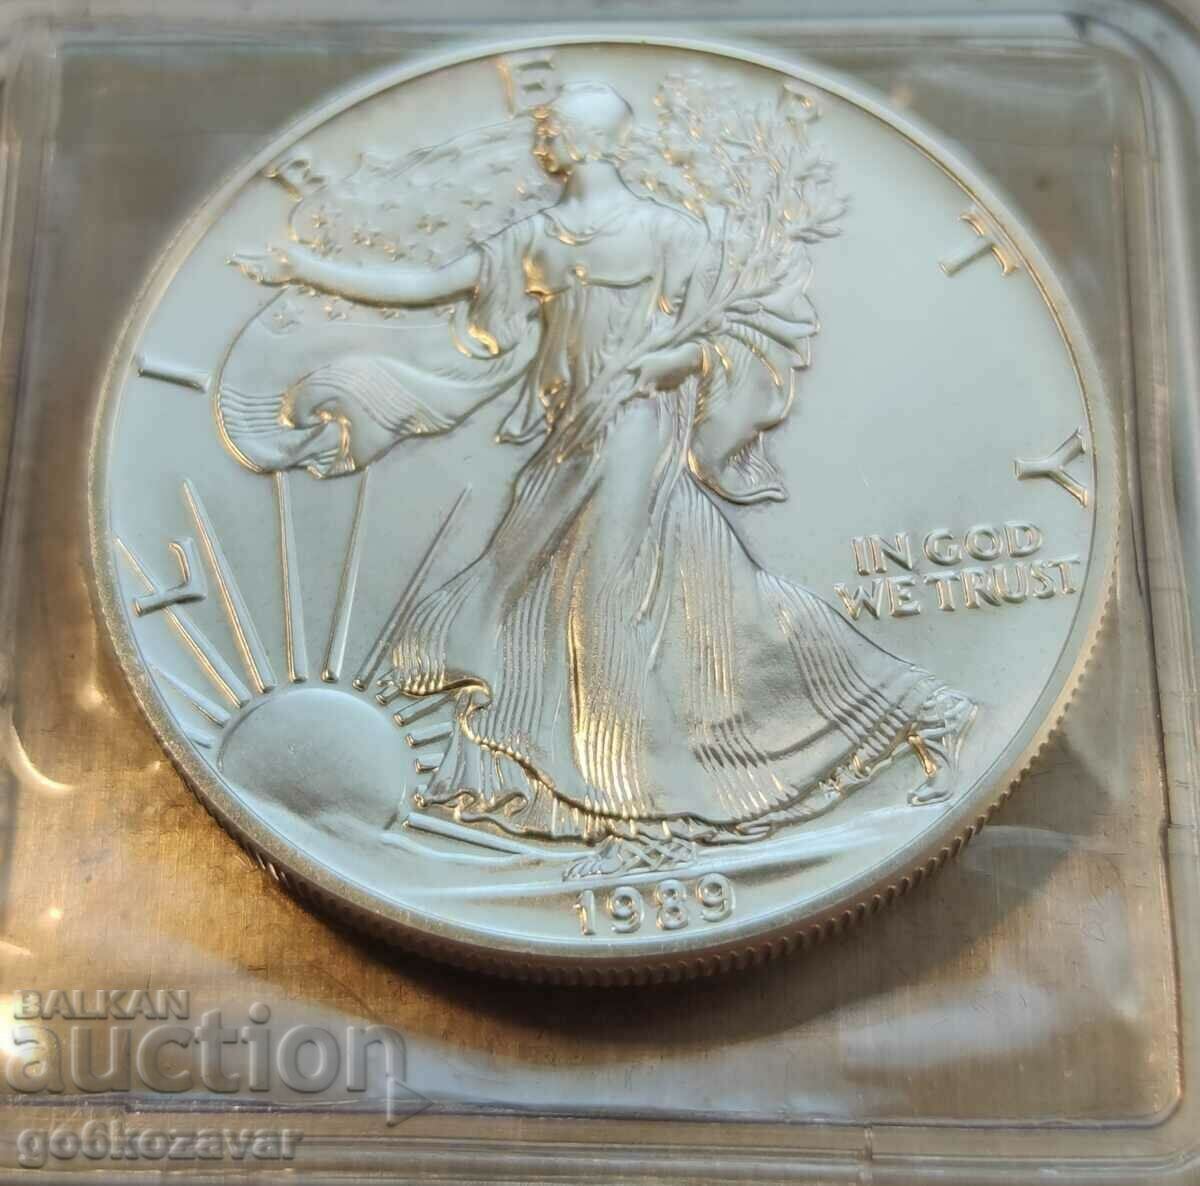 American Eagle 1 oz Silver 9.999 Ounce 1989 UNC Proof